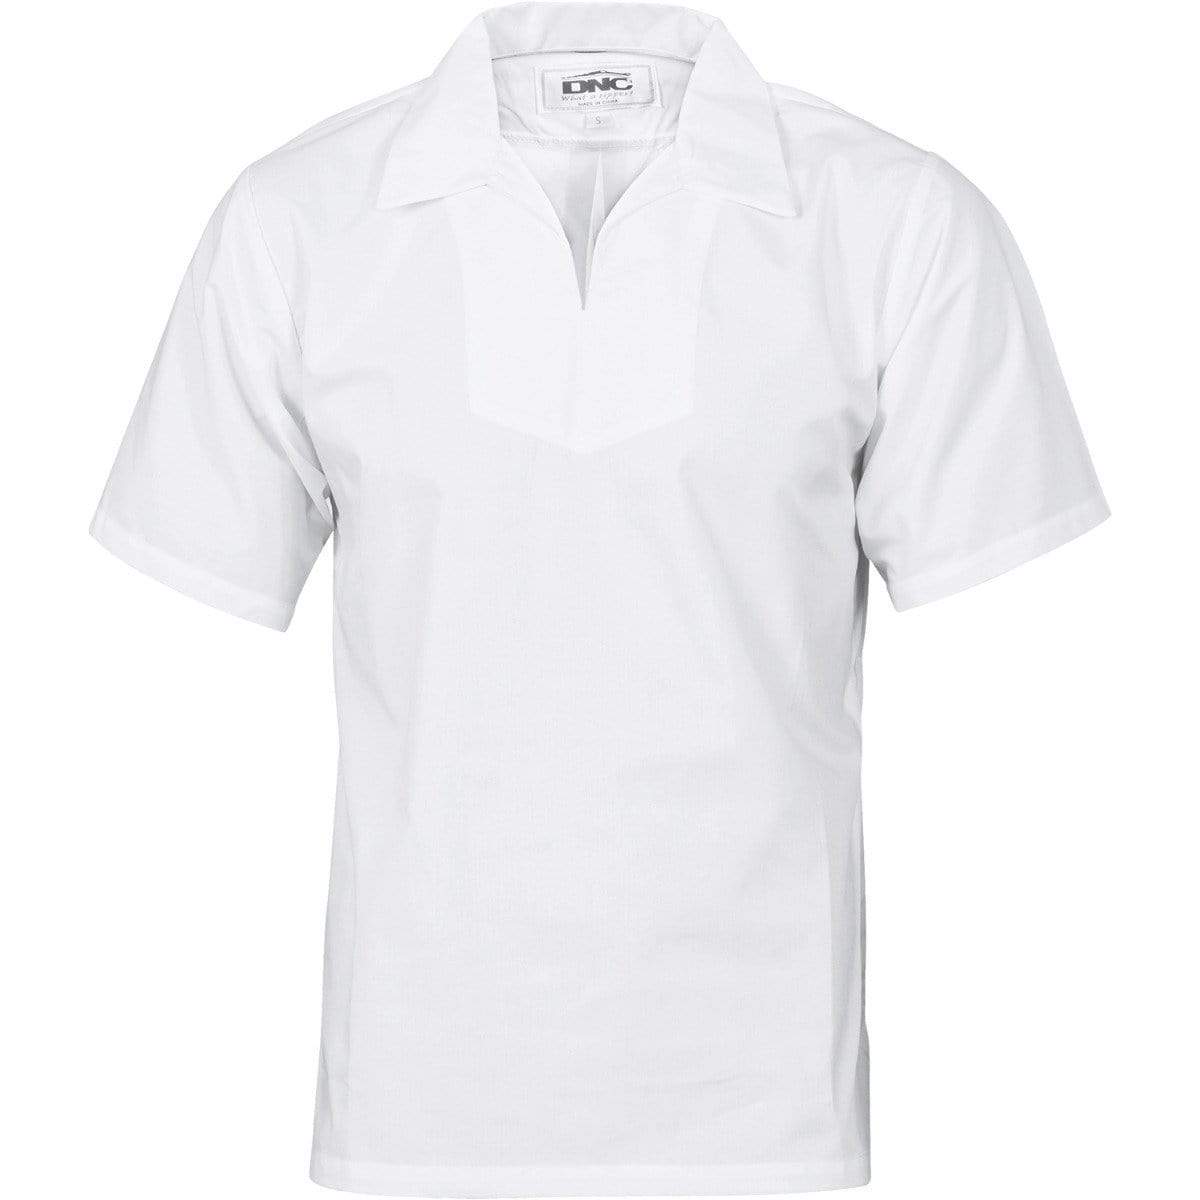 Dnc Workwear V-neck Food Industry Short Sleeve Jerkin - 1311 Hospitality & Chefwear DNC Workwear White XS 